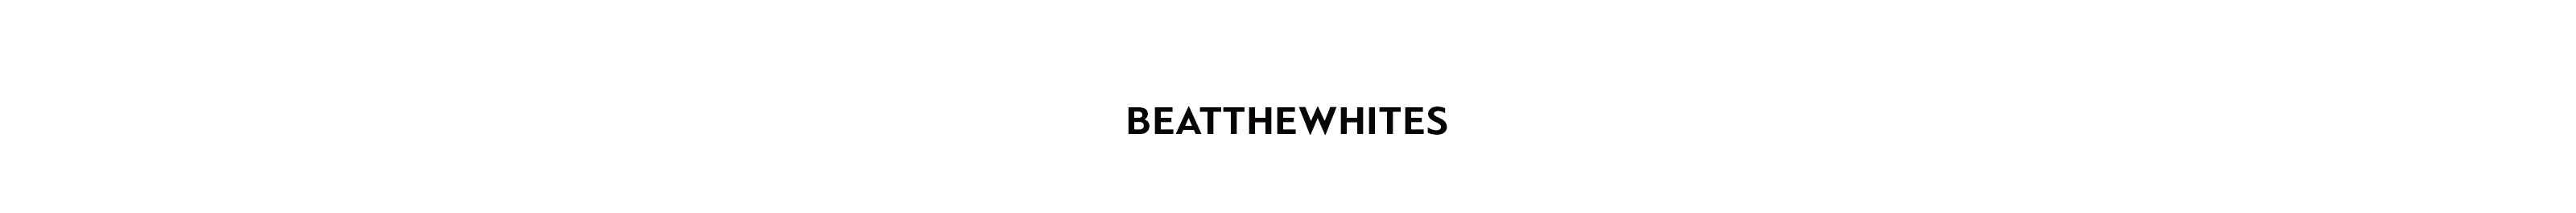 BEATTHEWHITES PC's profile banner